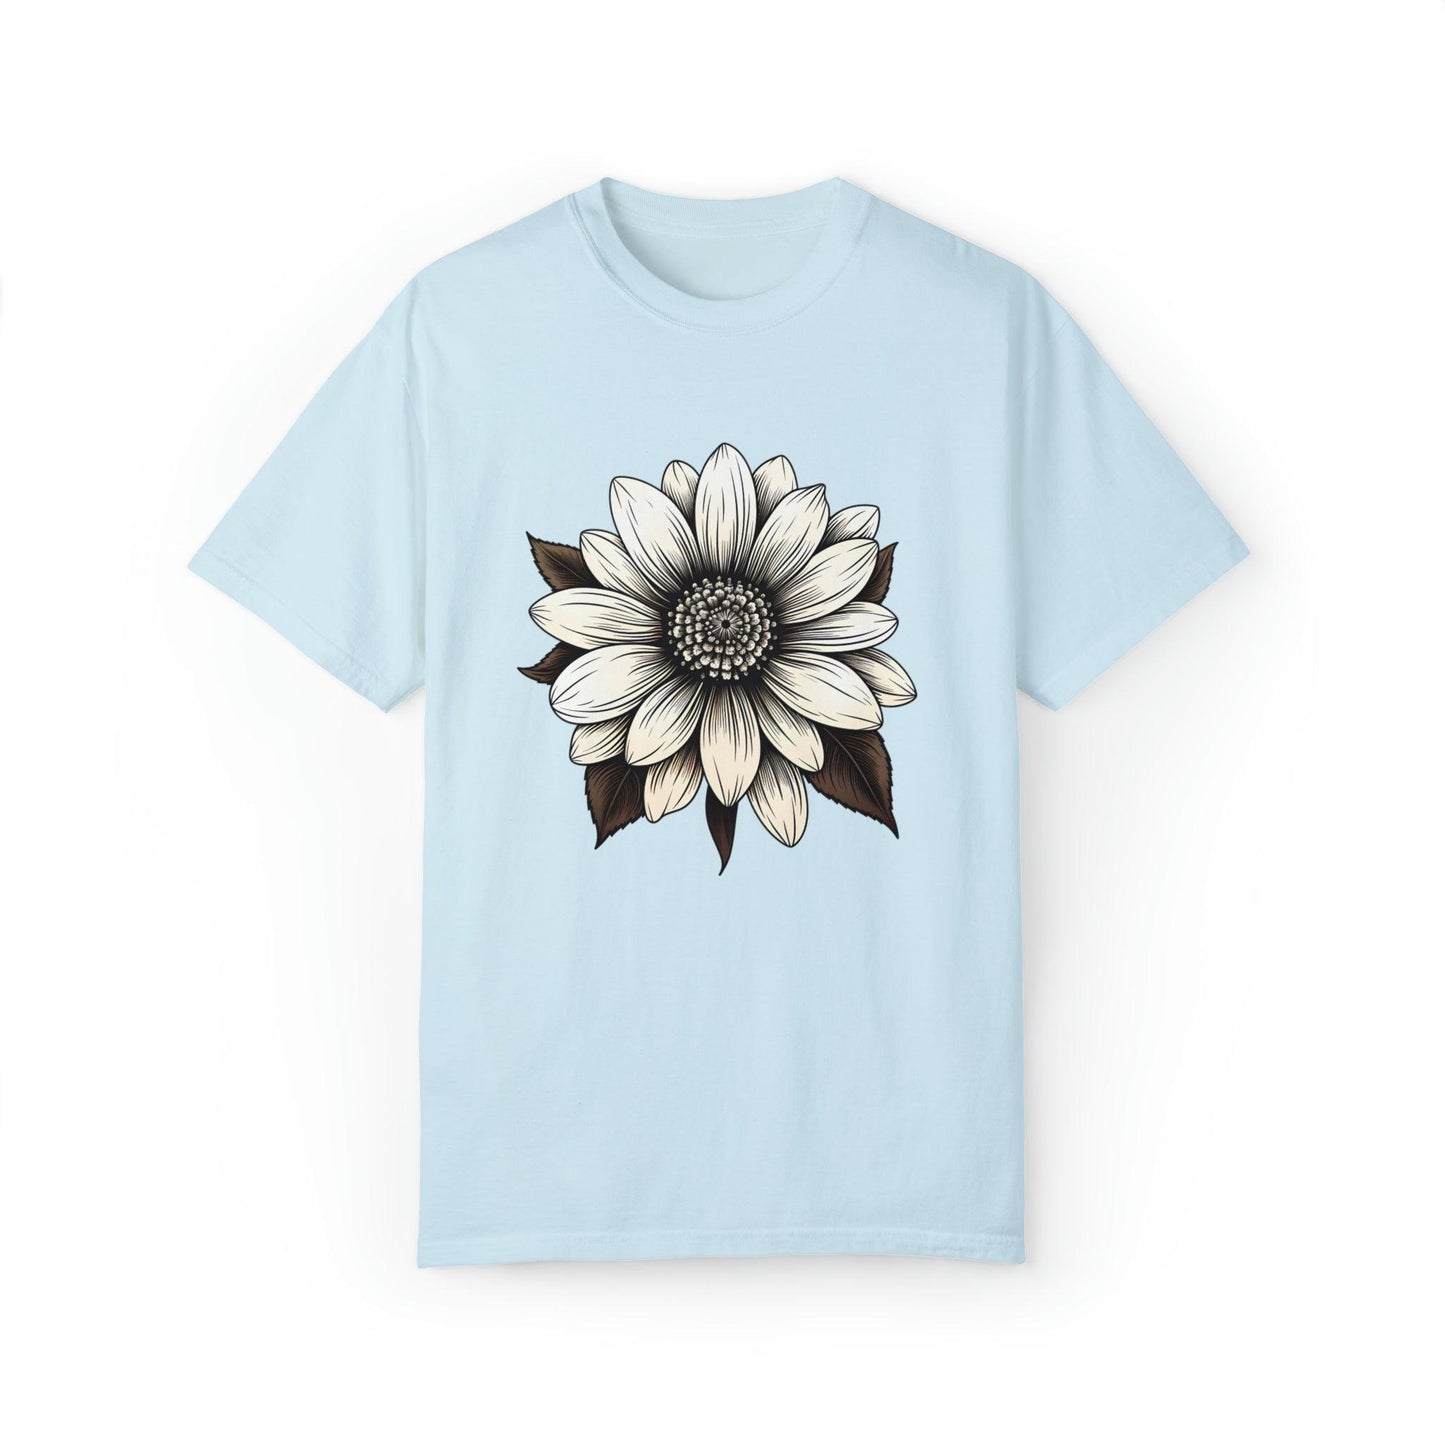 Sunflower Shirt Flower Shirt Aesthetic Women Top Floral Graphic Tee Floral Shirt Flower T-shirt, Wild Flower Shirt Gift For Her - Giftsmojo